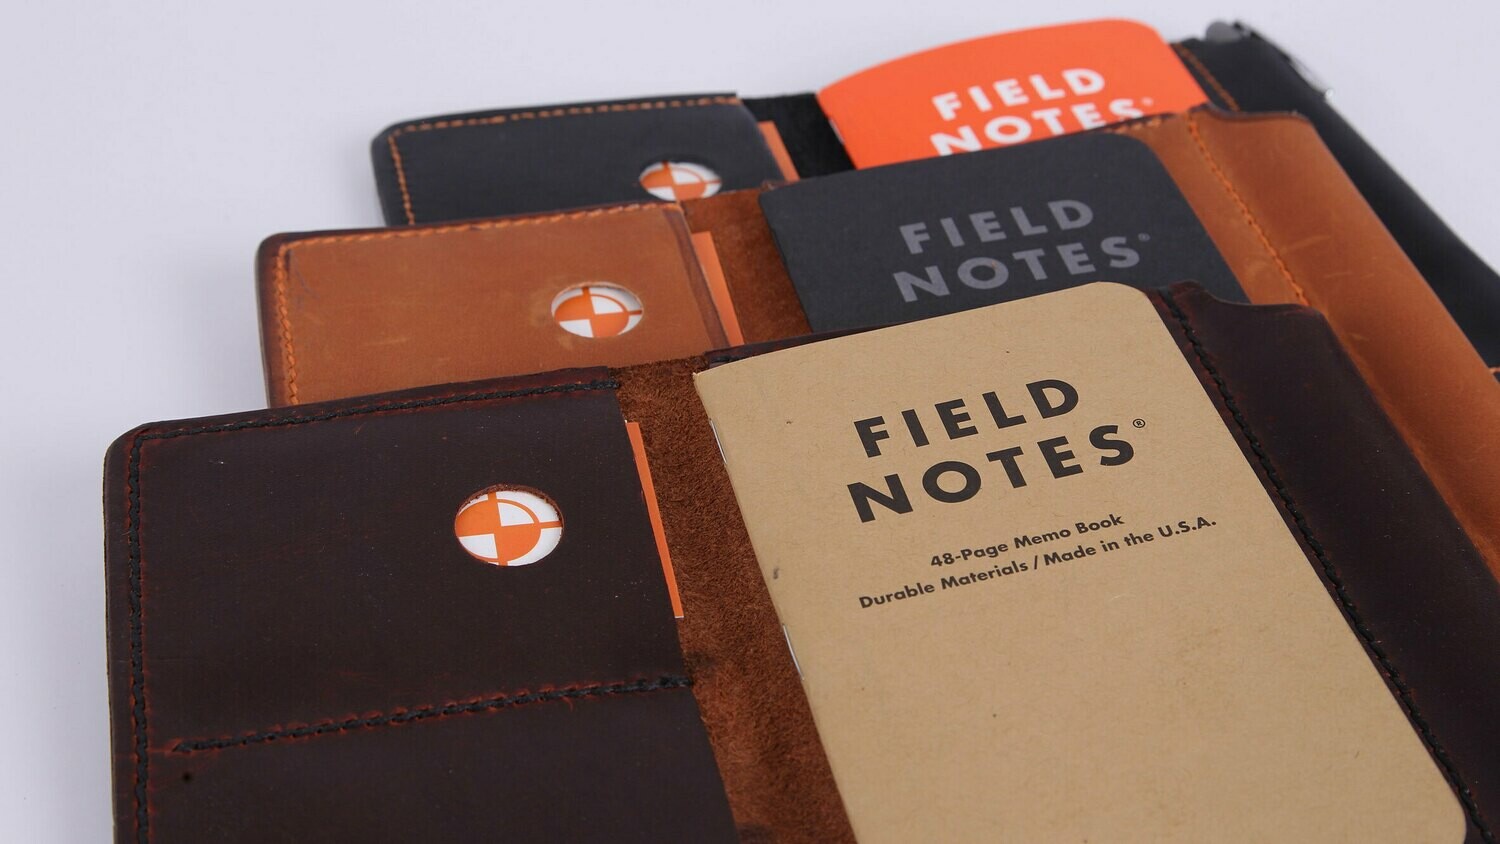 Mr Field - Notebook